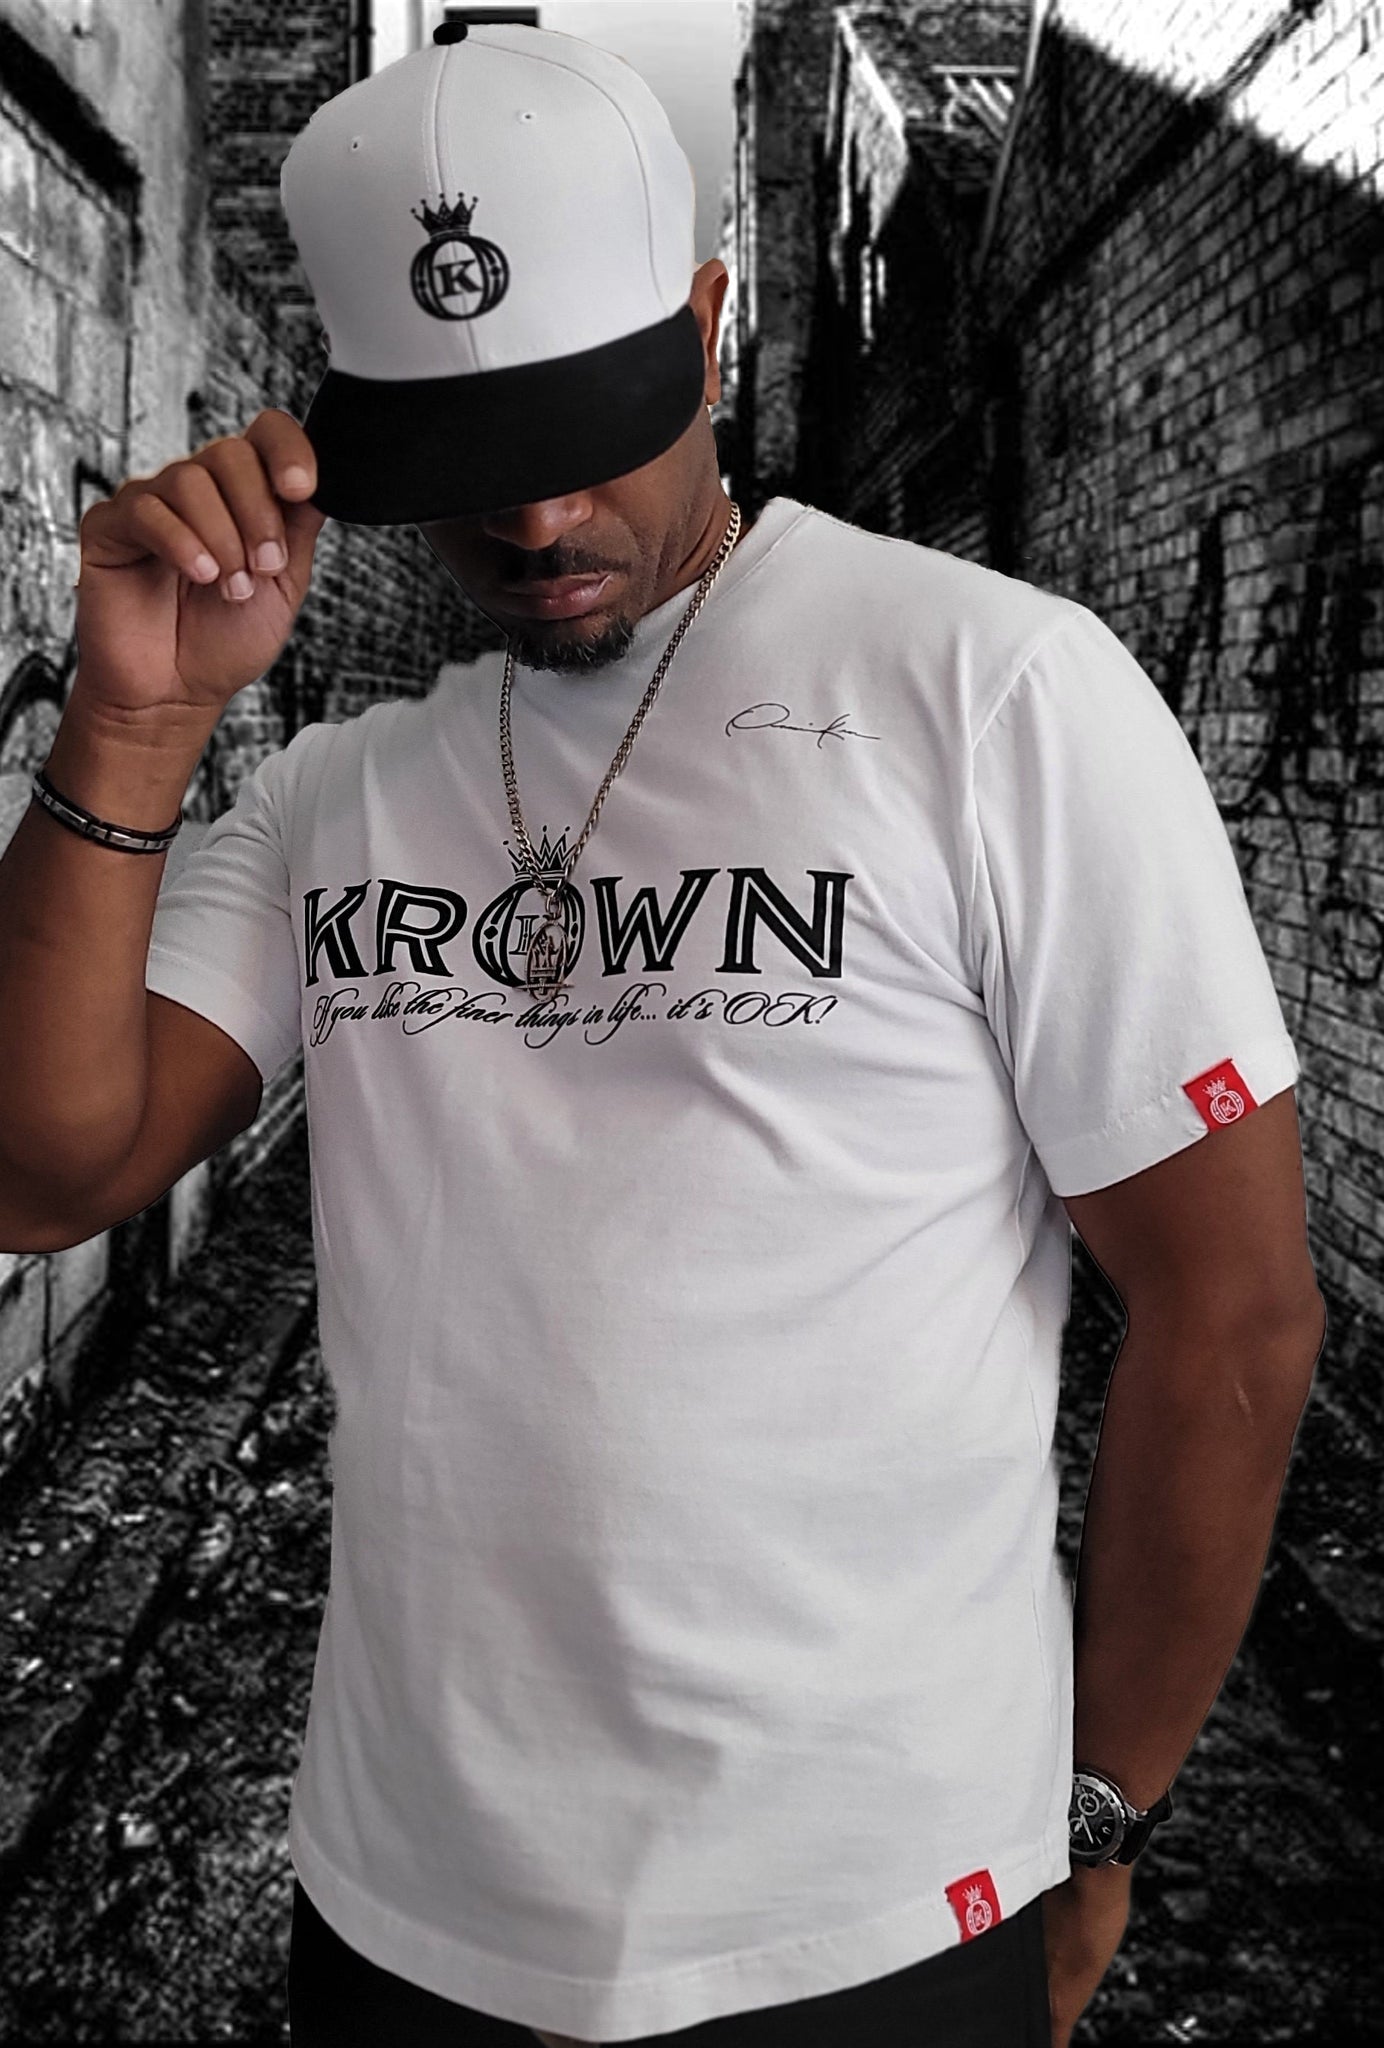 onassis krown white t-shirt & cap flagship combo